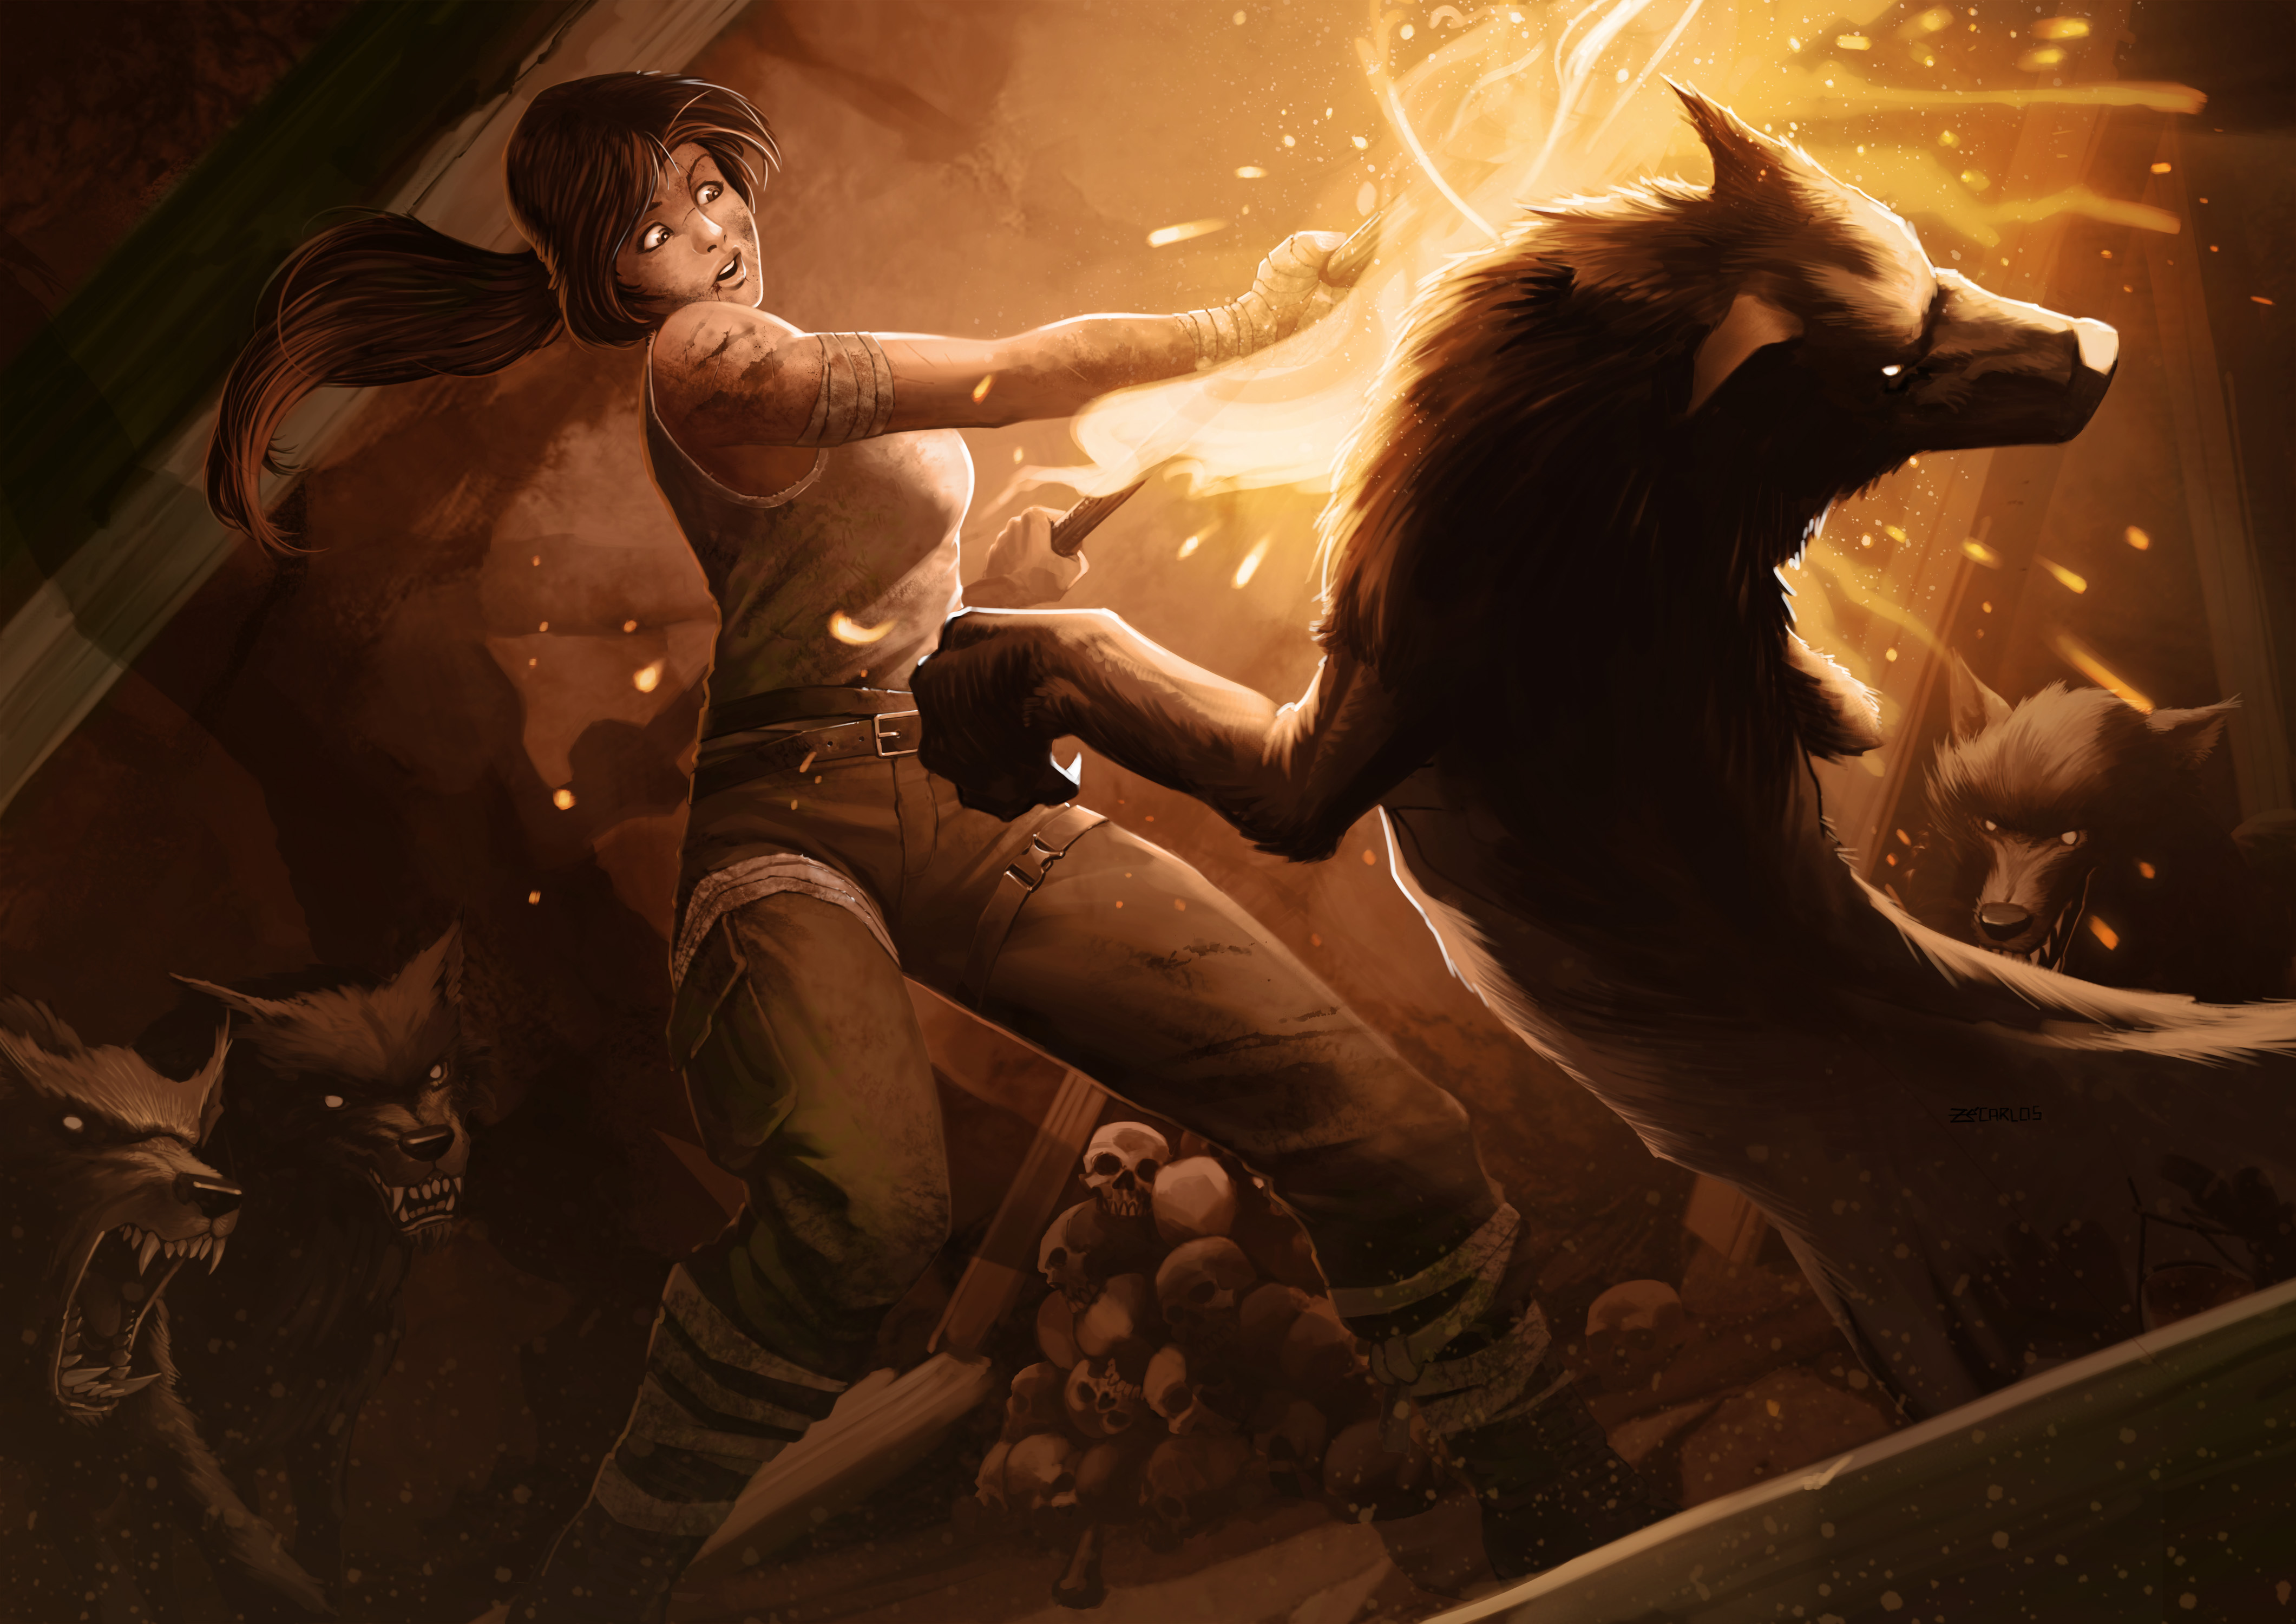 Age of Mythology TRL - Woad Raider by Tapejara on DeviantArt